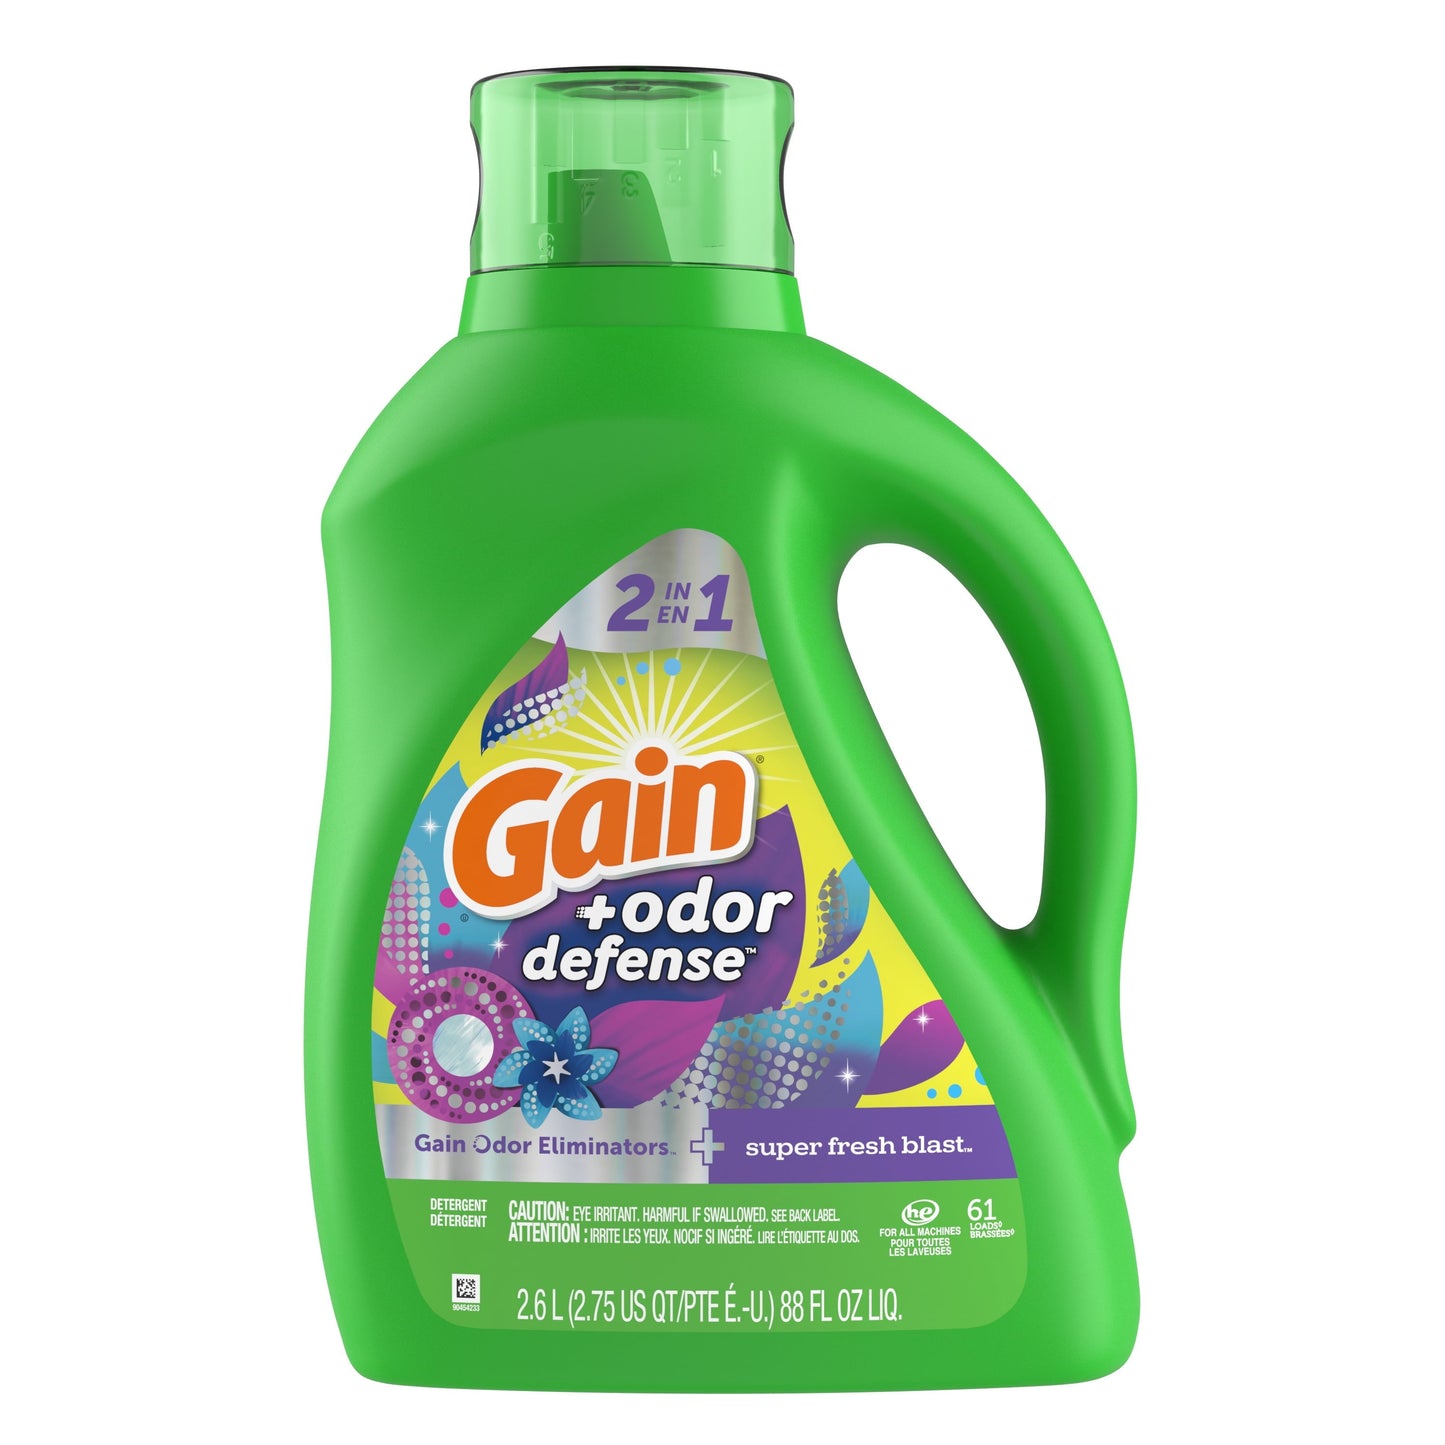 Gain Odor Defense Liquid Laundry Detergent, Super Fresh Blast, 61 Lds, 88 fl oz